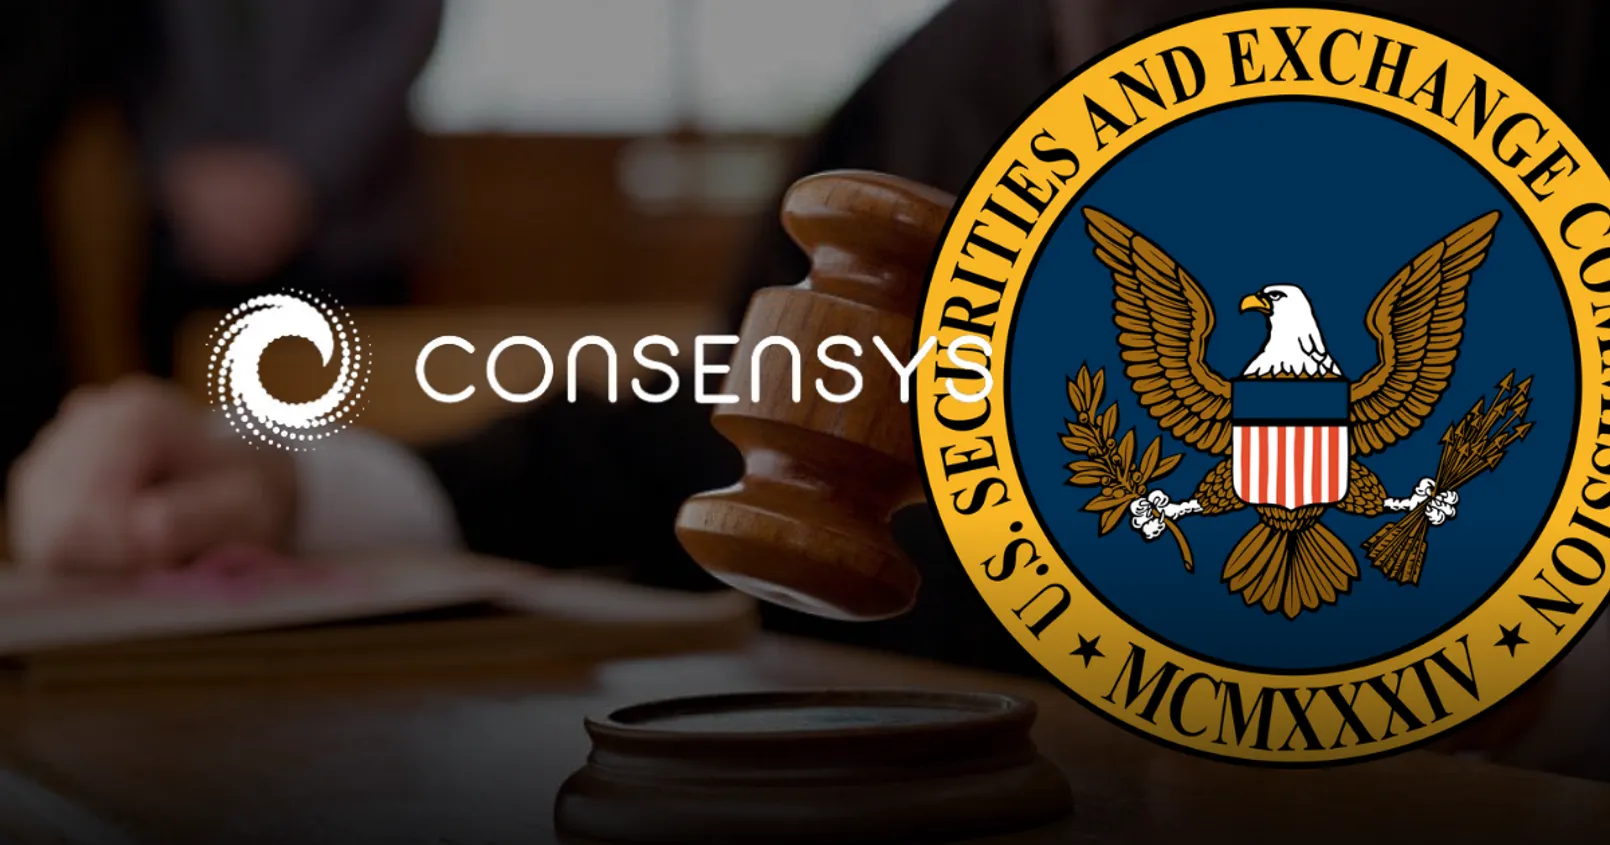 ConsenSys ทำการฟ้องร้อง SEC ของสหรัฐ ในประเด็นที่มีการใช้อำนาจโดยไม่ชอบด้วยกฎหมาย